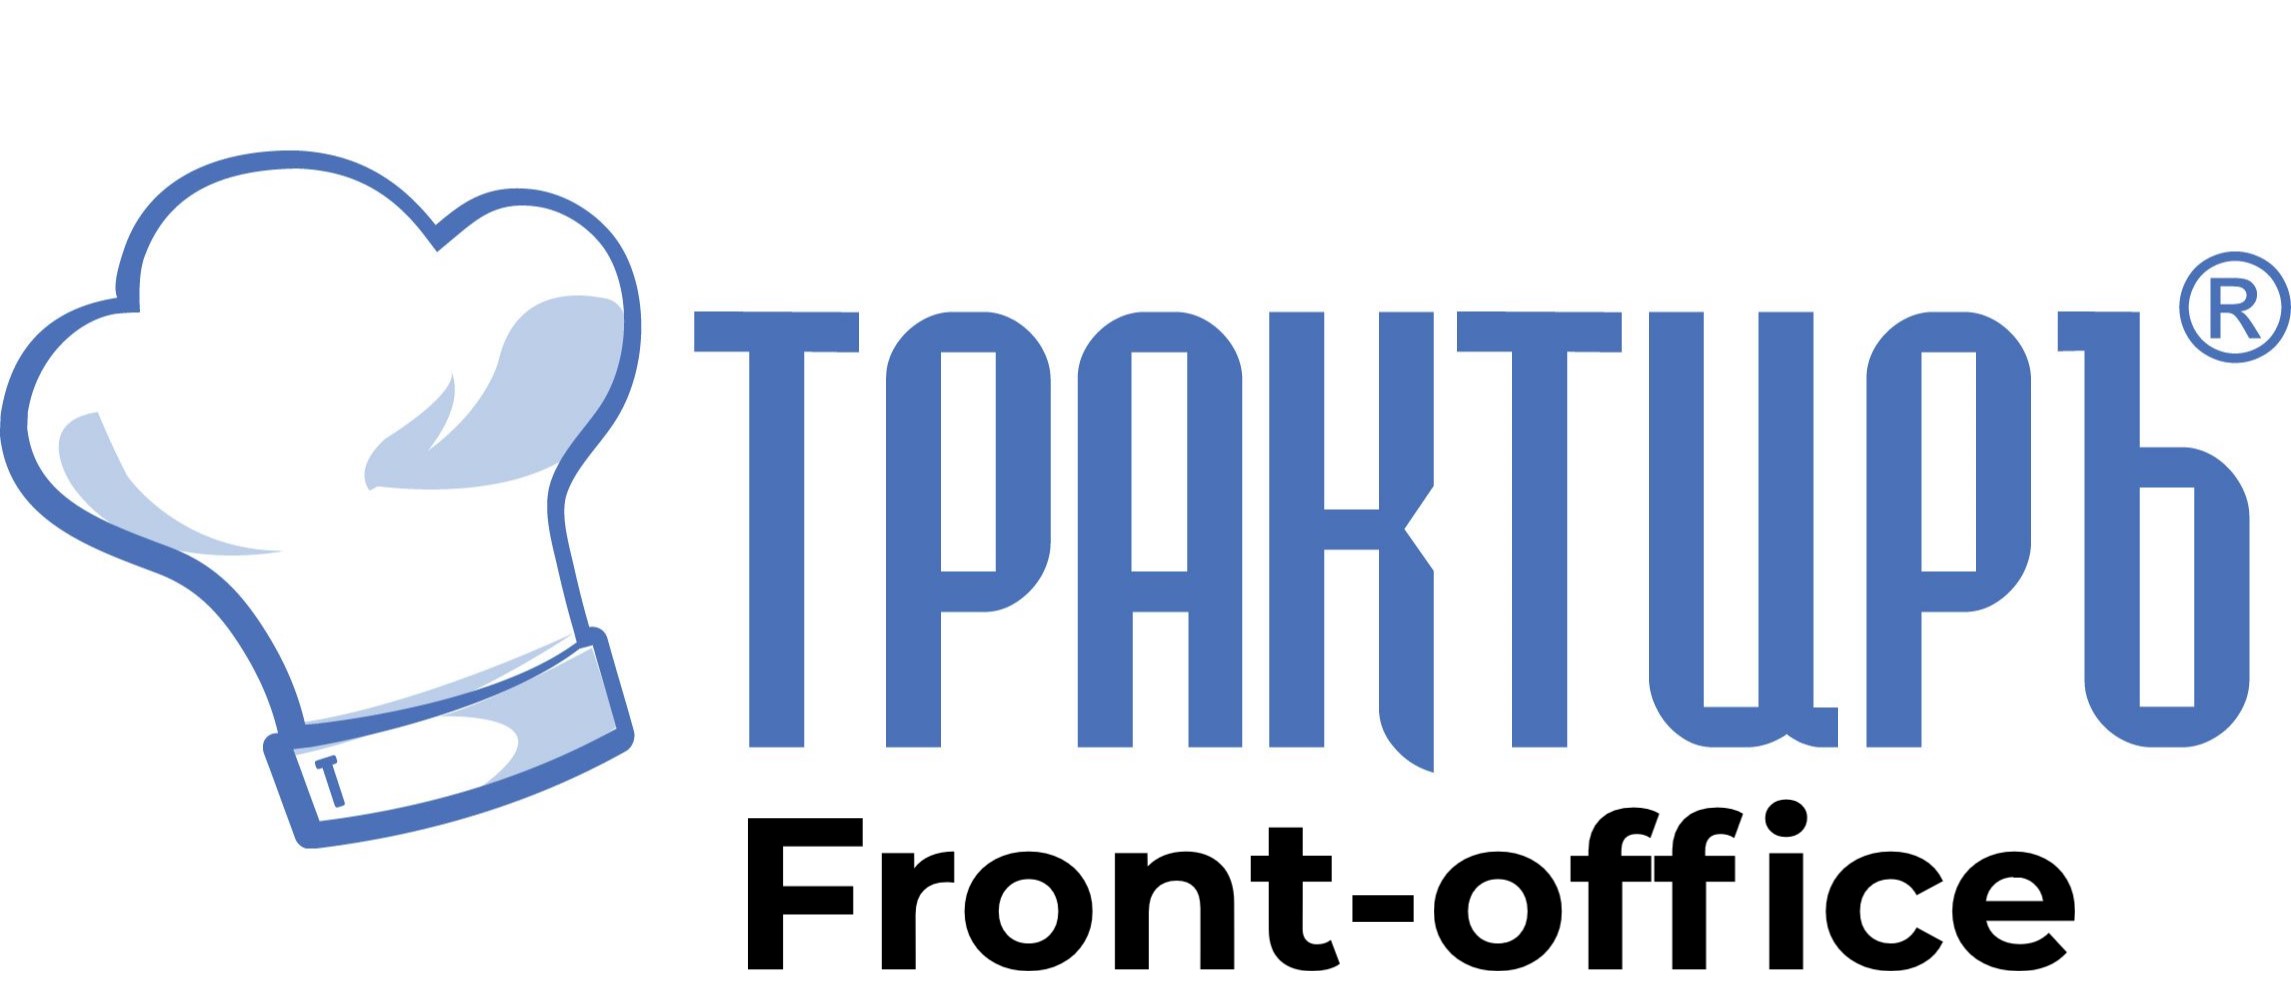 Трактиръ: Front-Office v4.5  Основная поставка в Нижнекамске